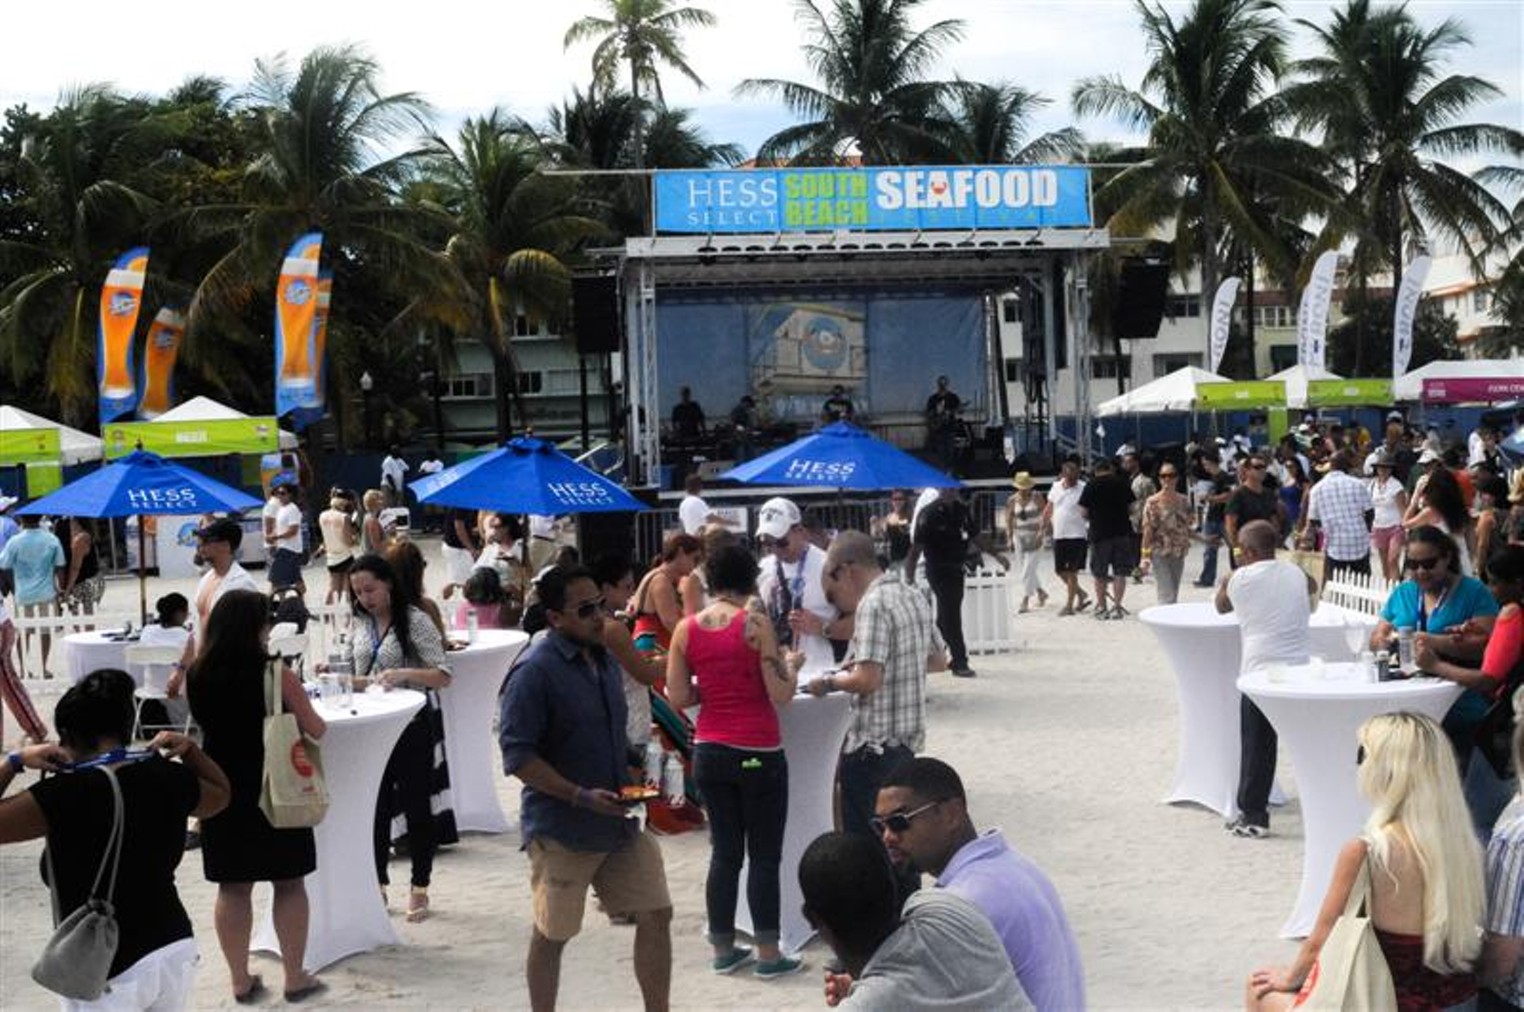 South Beach Seafood Festival Miami Miami New Times The Leading